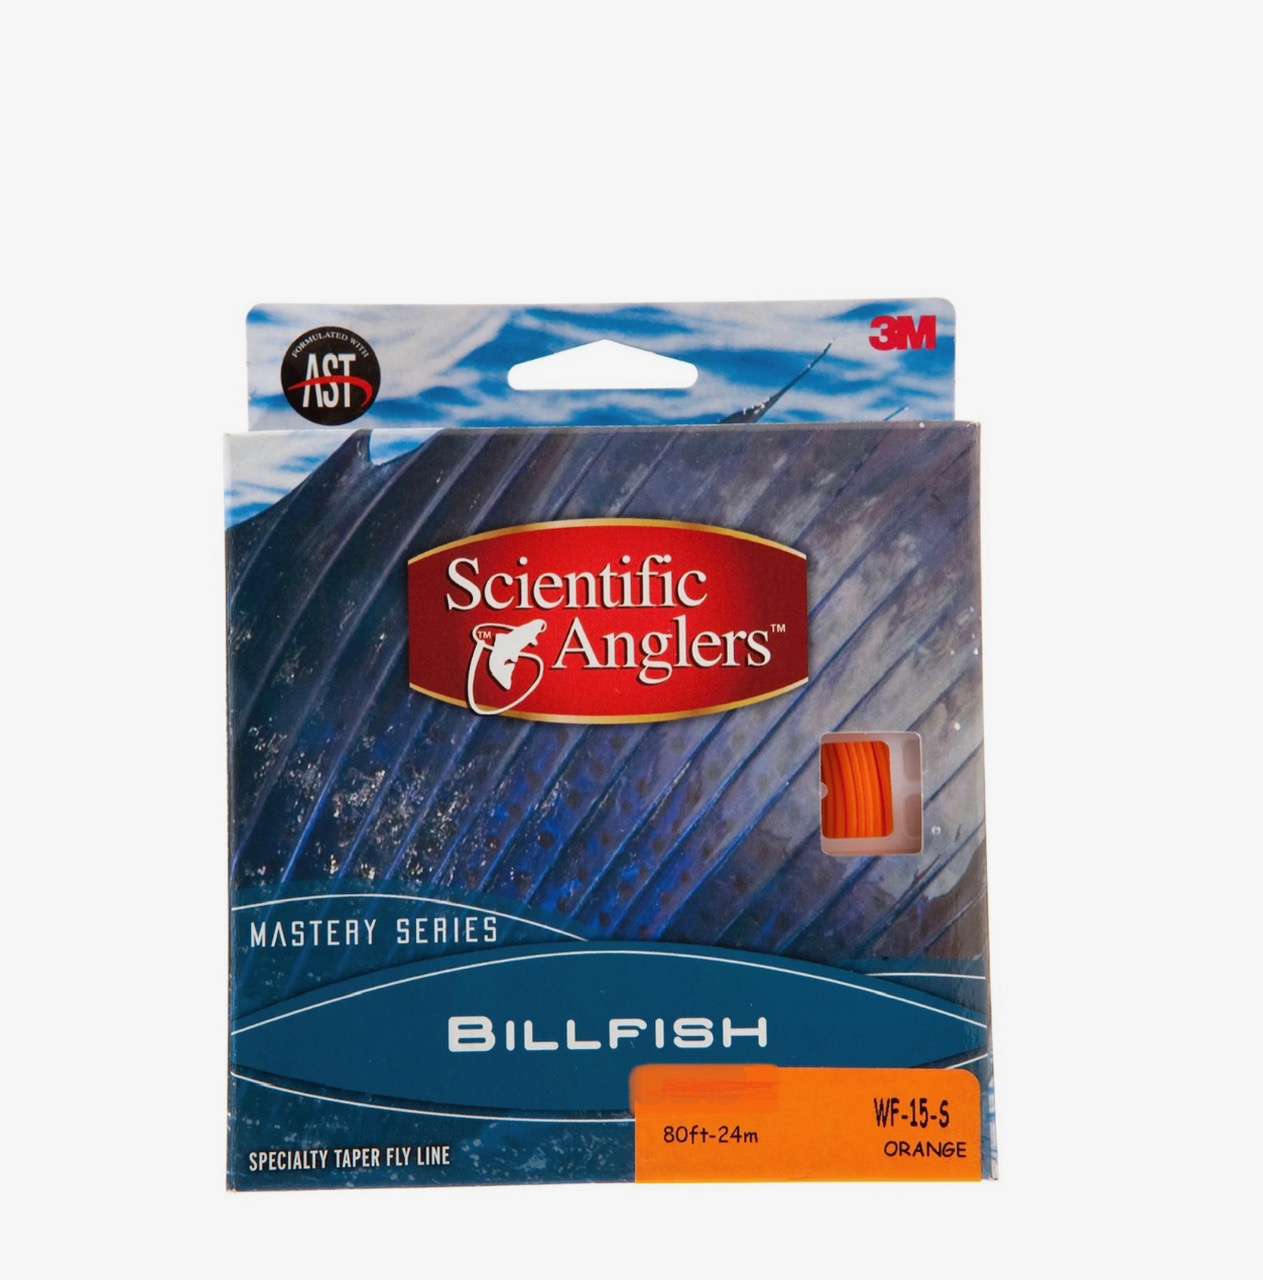 Scientific Anglers Mastery Billfish